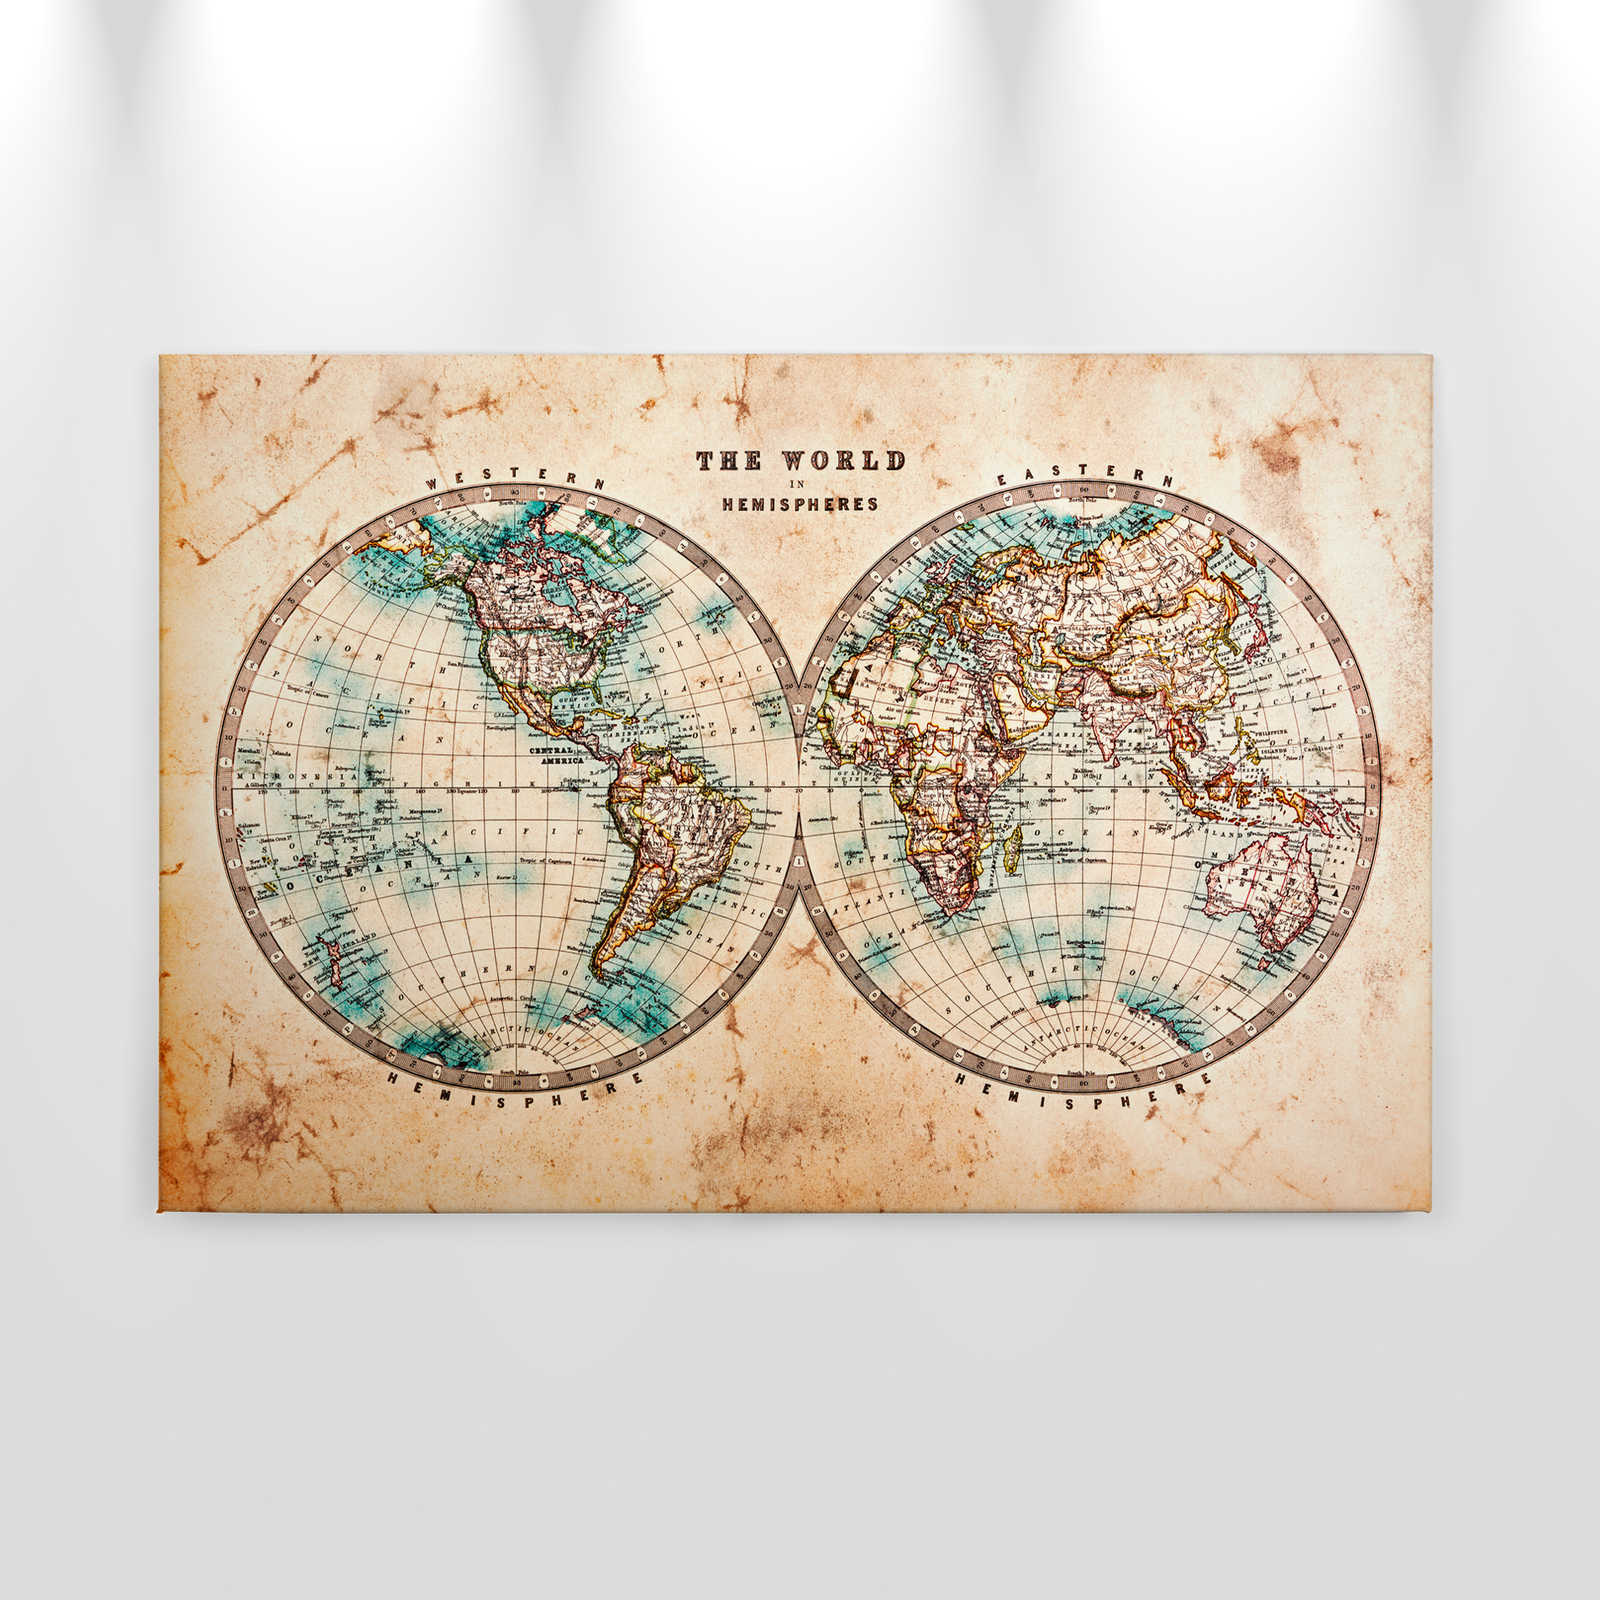             Canvas with Vintage World Map in Hemispheres | brown, beige, blue - 0.90 m x 0.60 m
        